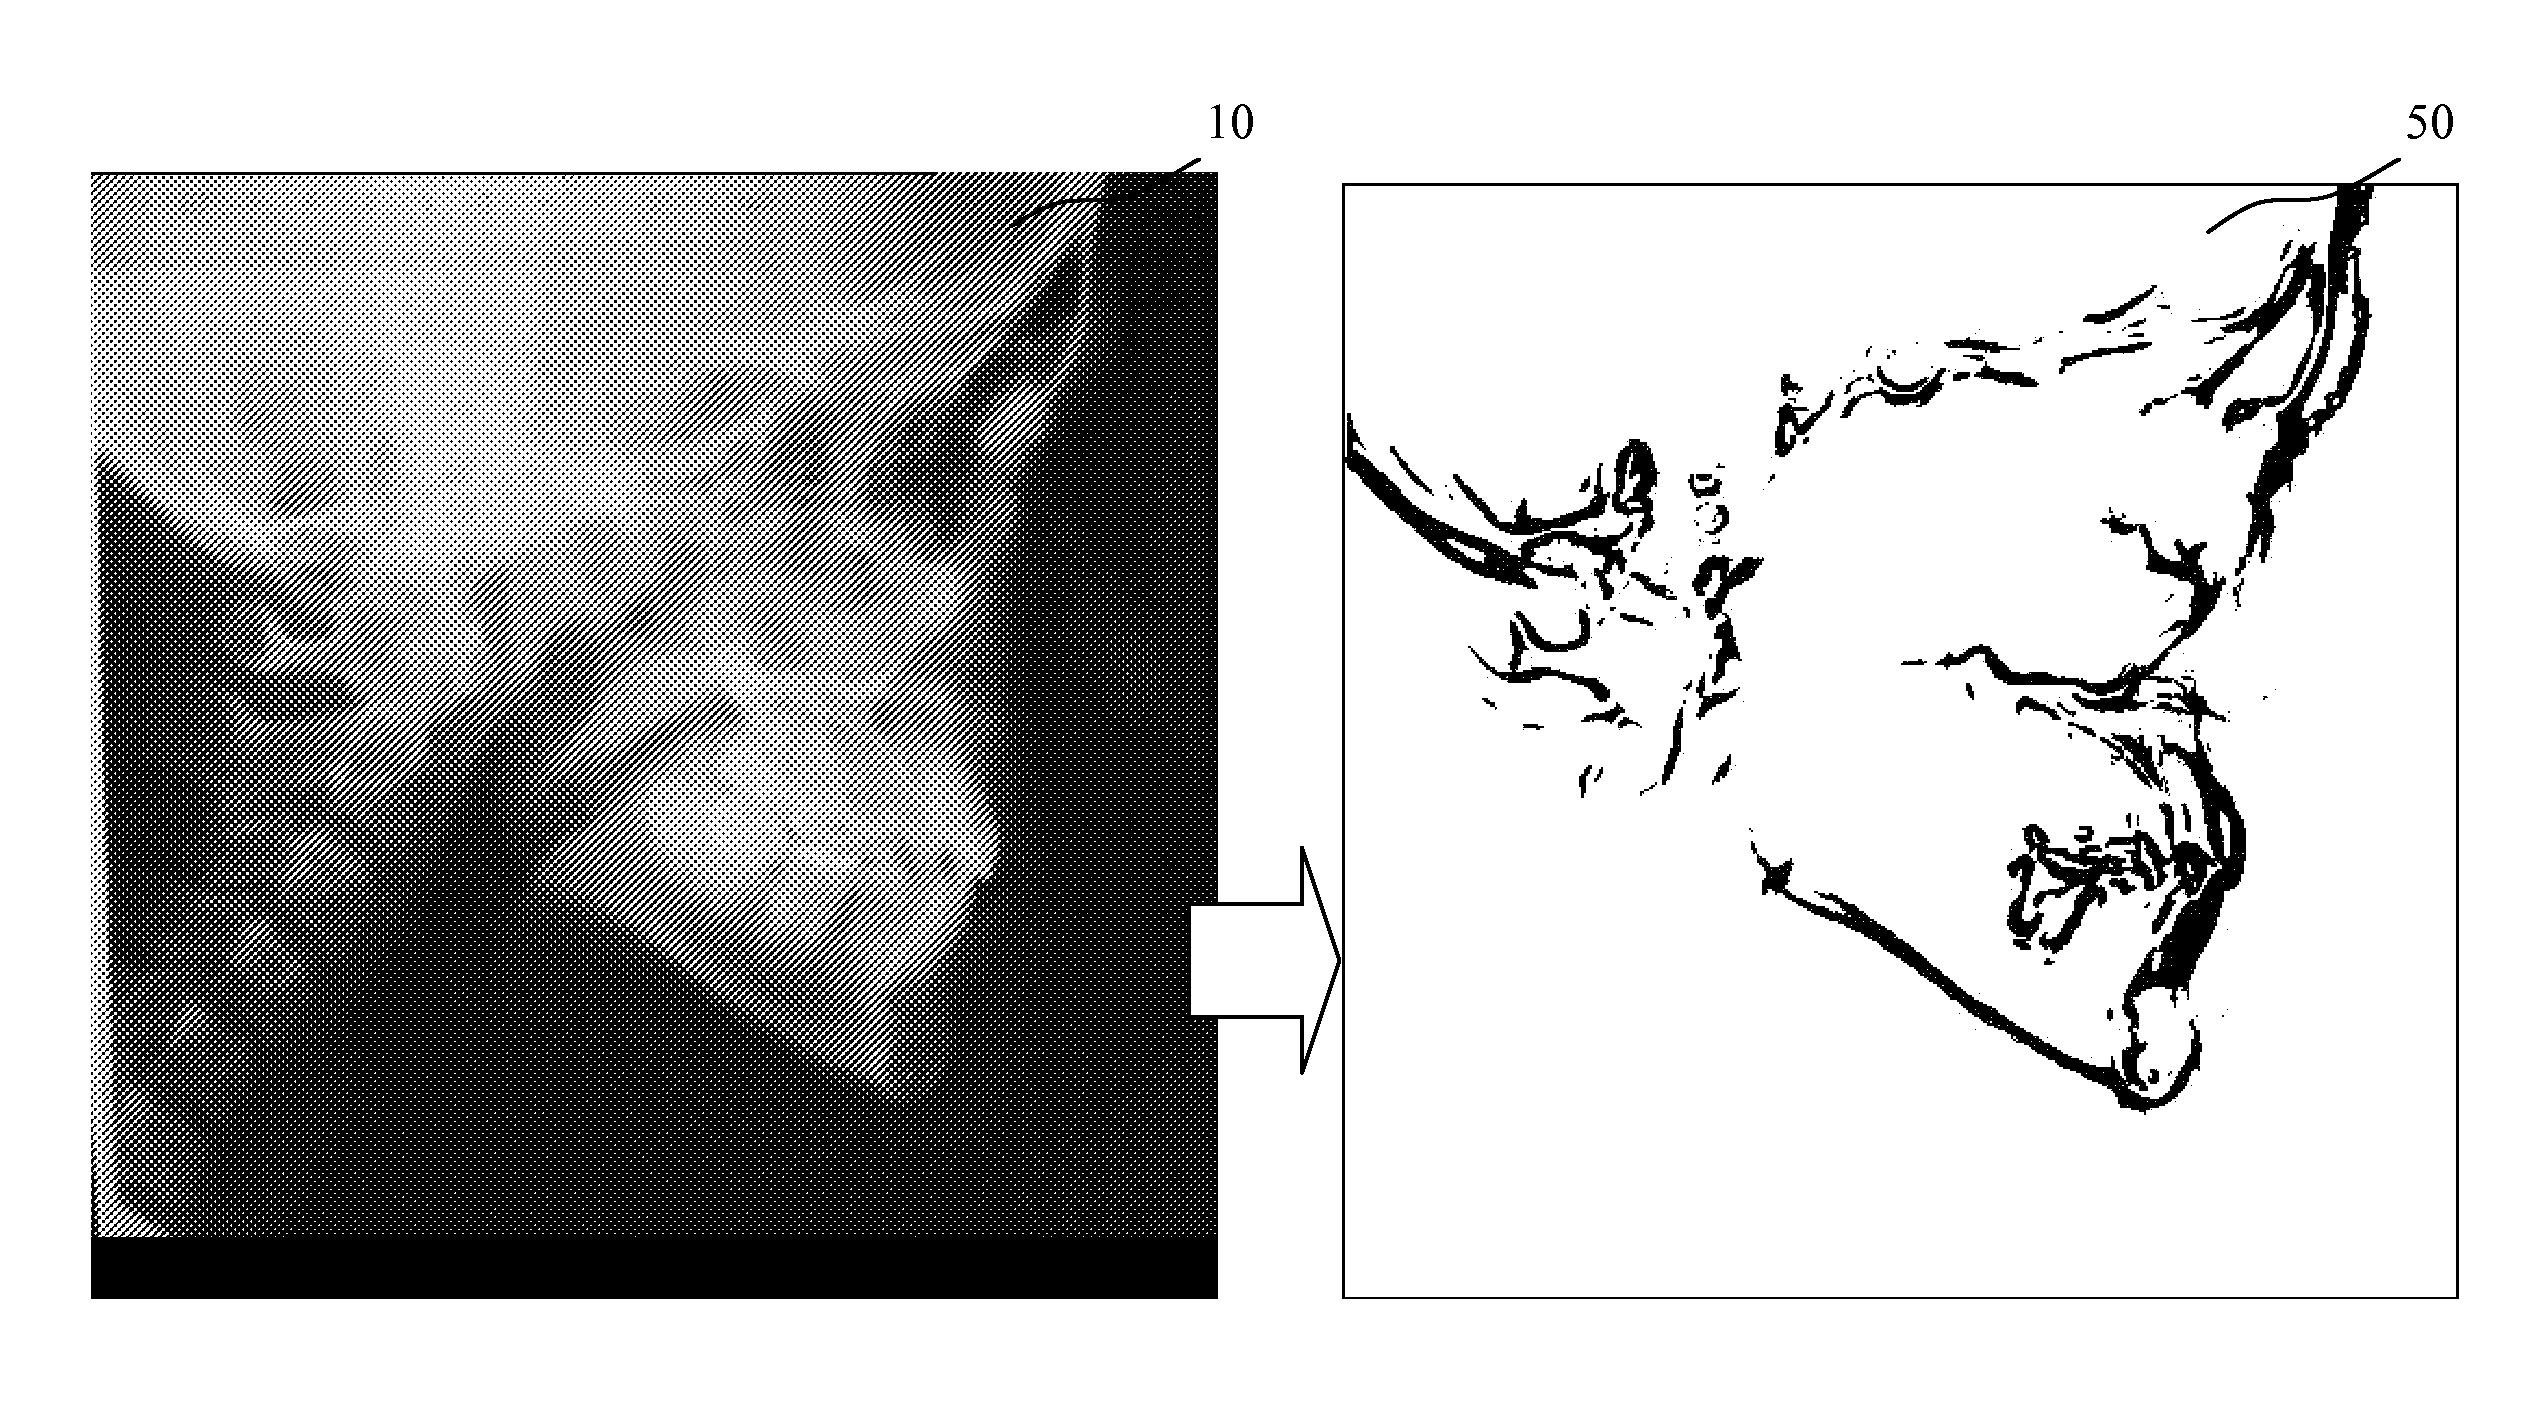 Cephalogram Image Analysis Method